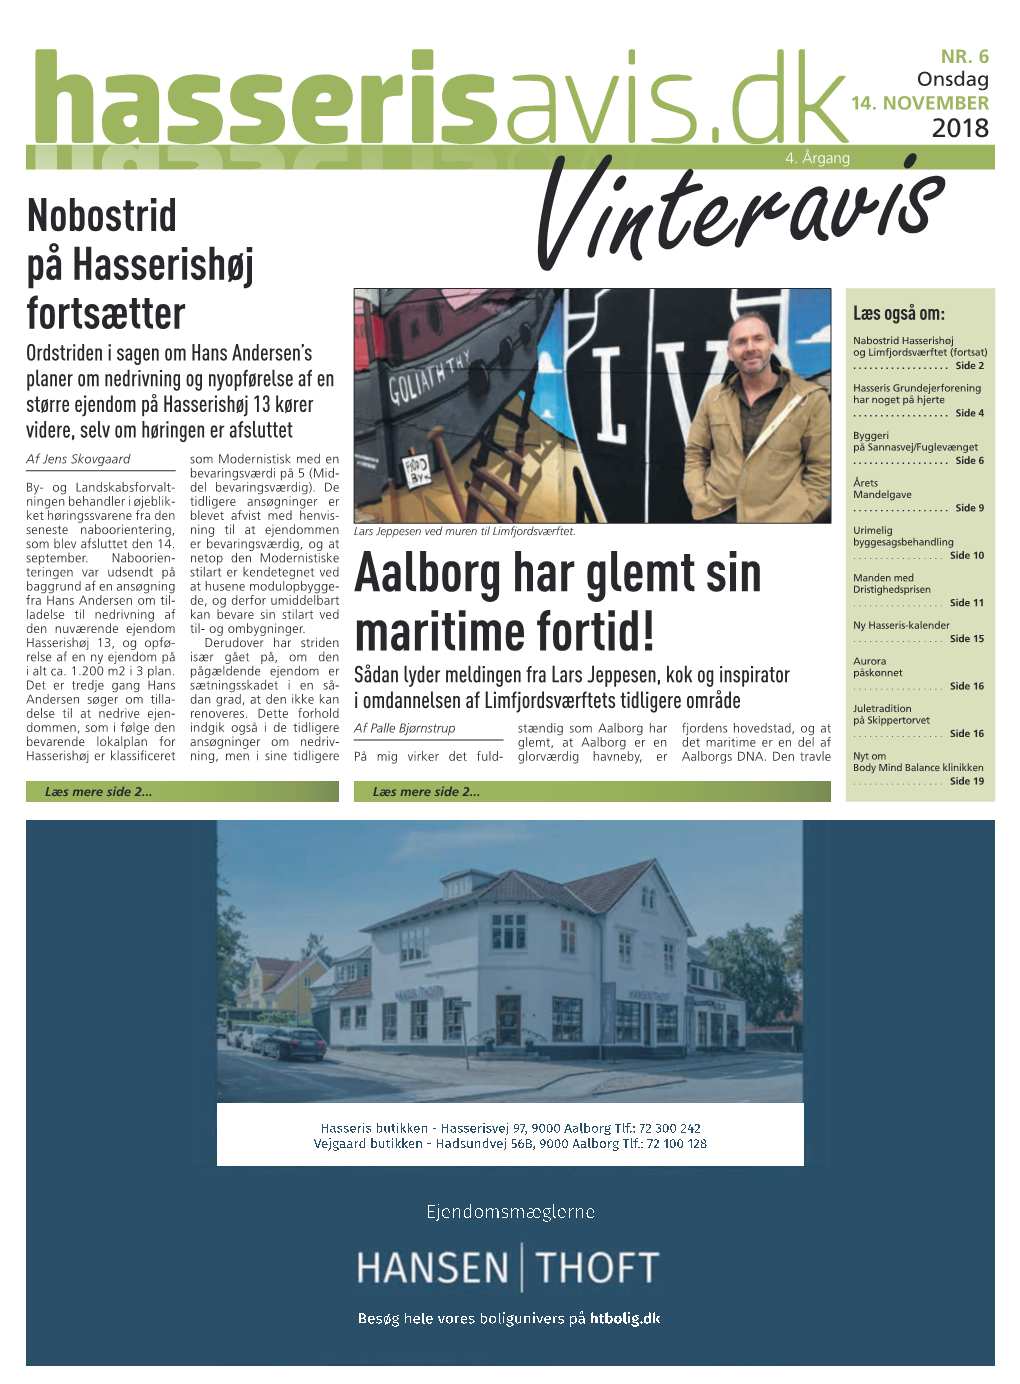 Aalborg Har Glemt Sin Maritime Fortid!